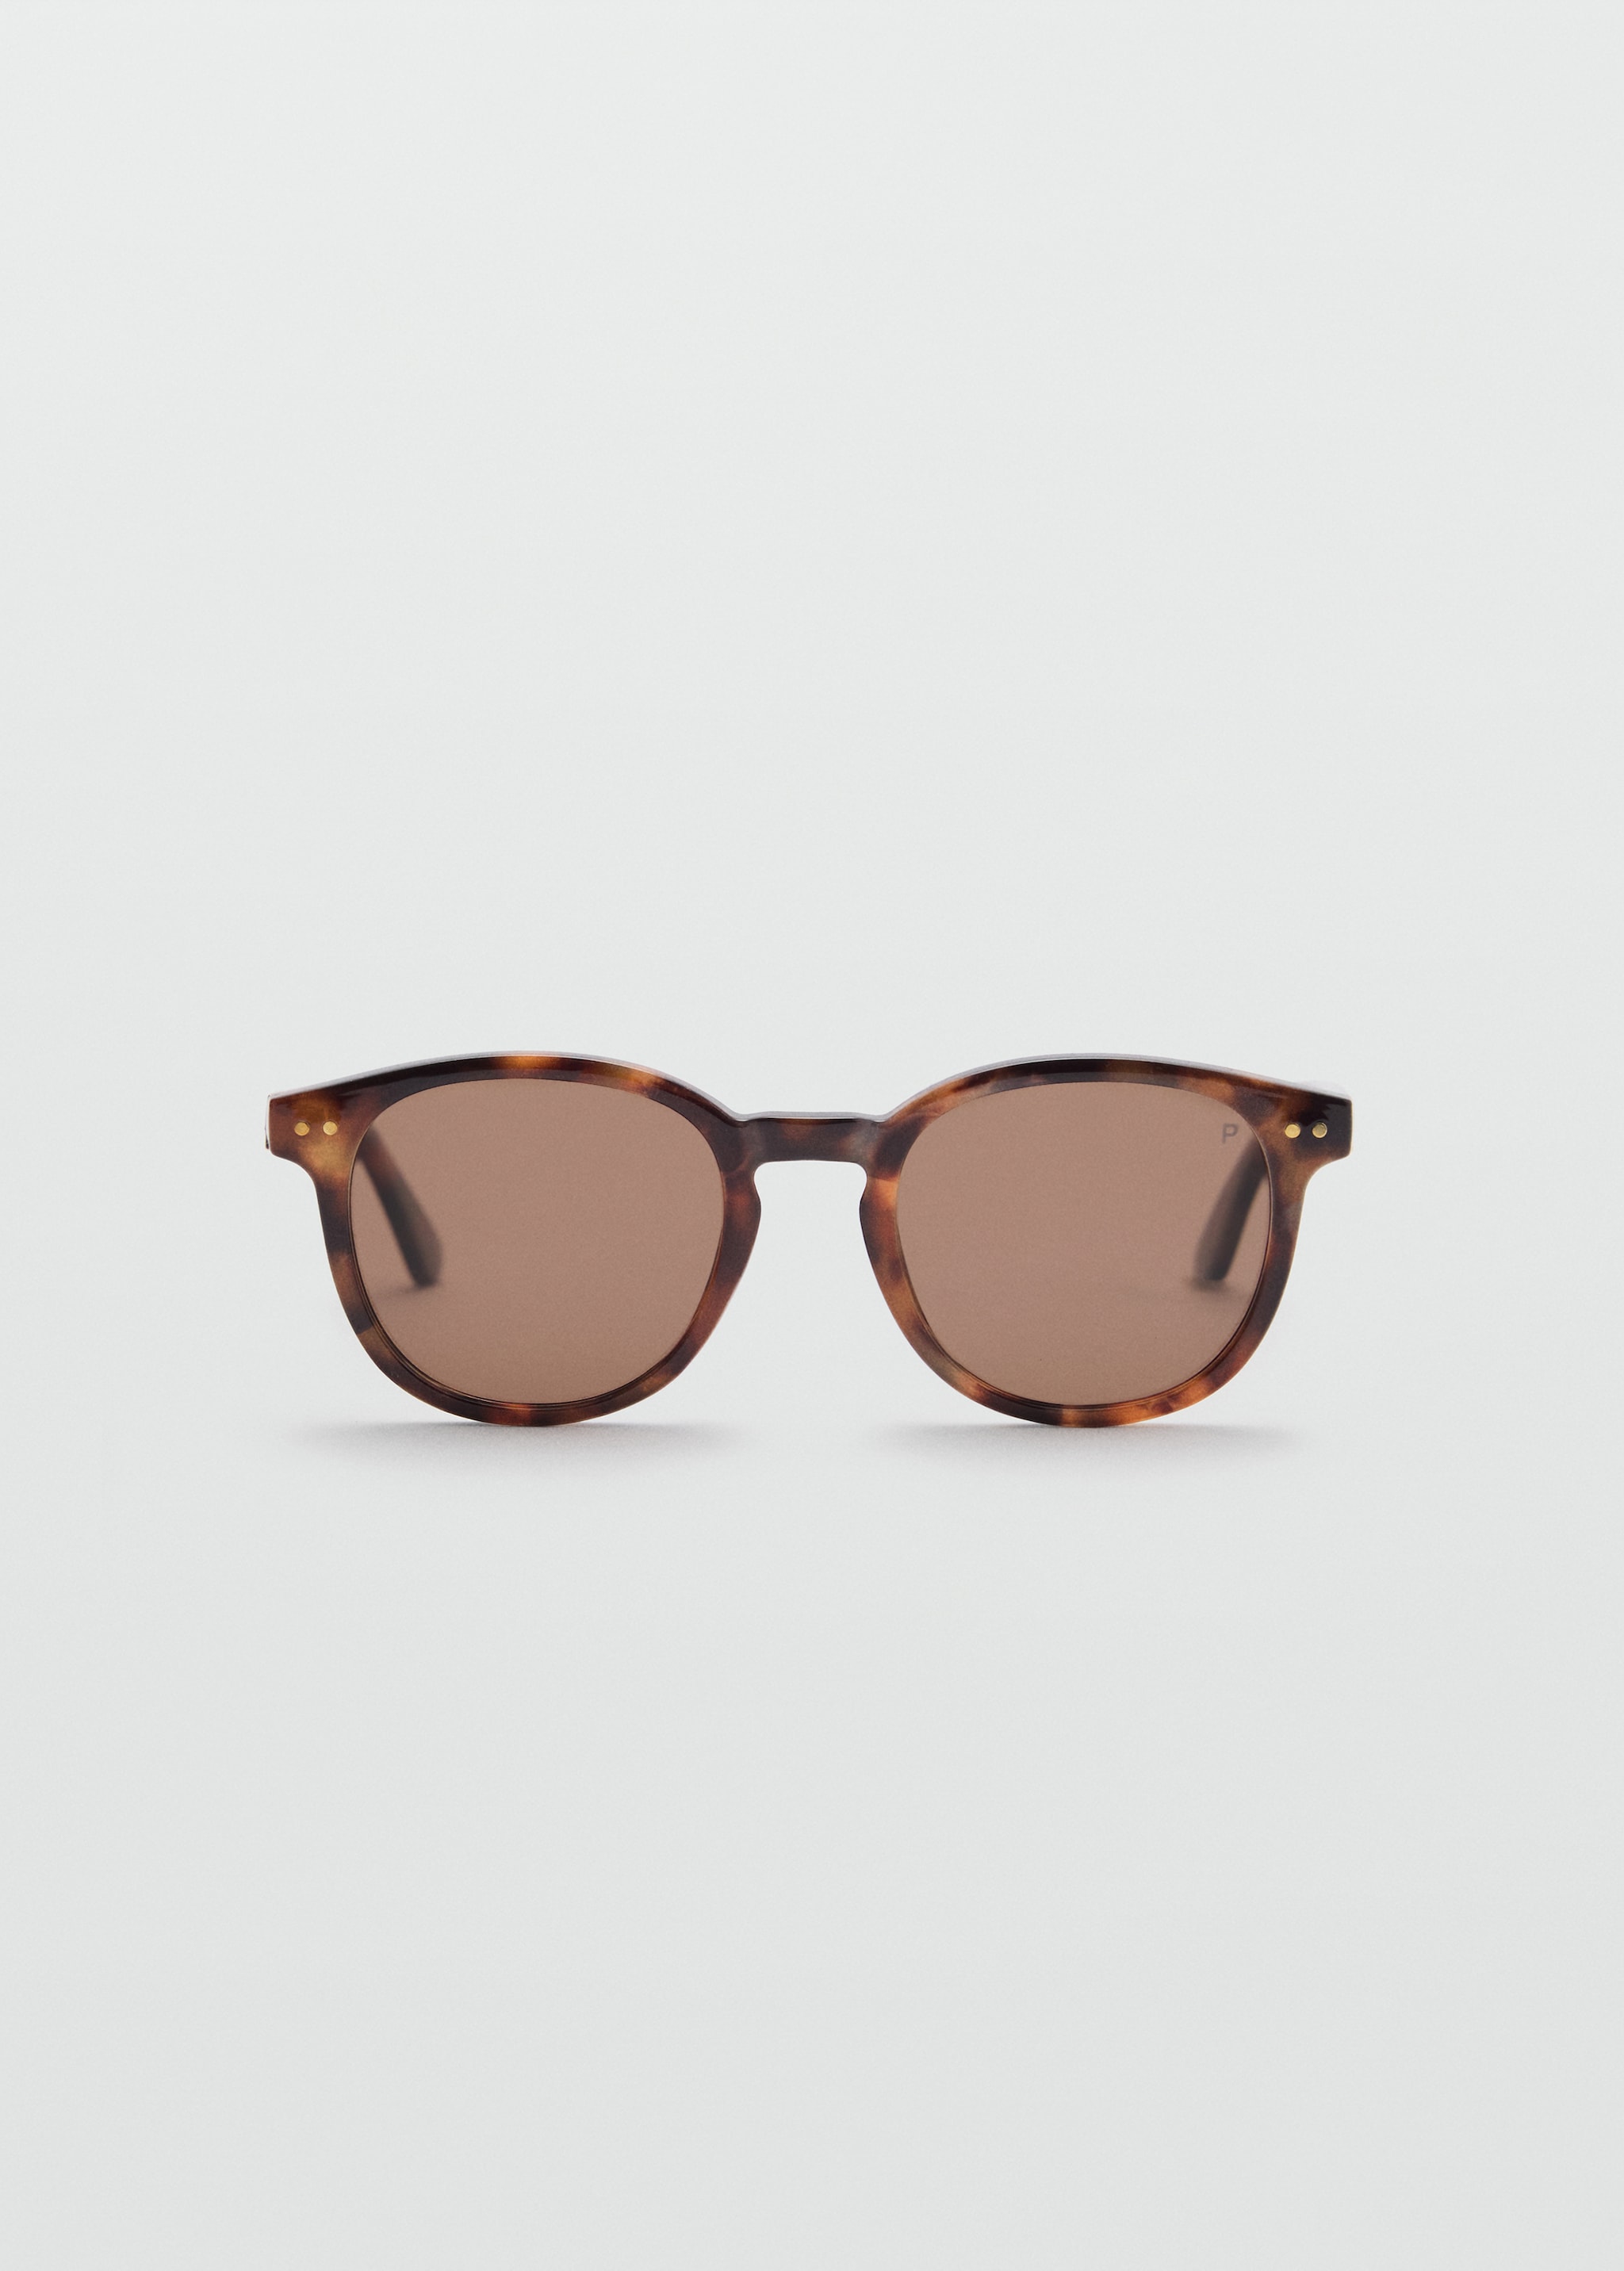 Sunglasses porter - Изделие без модели